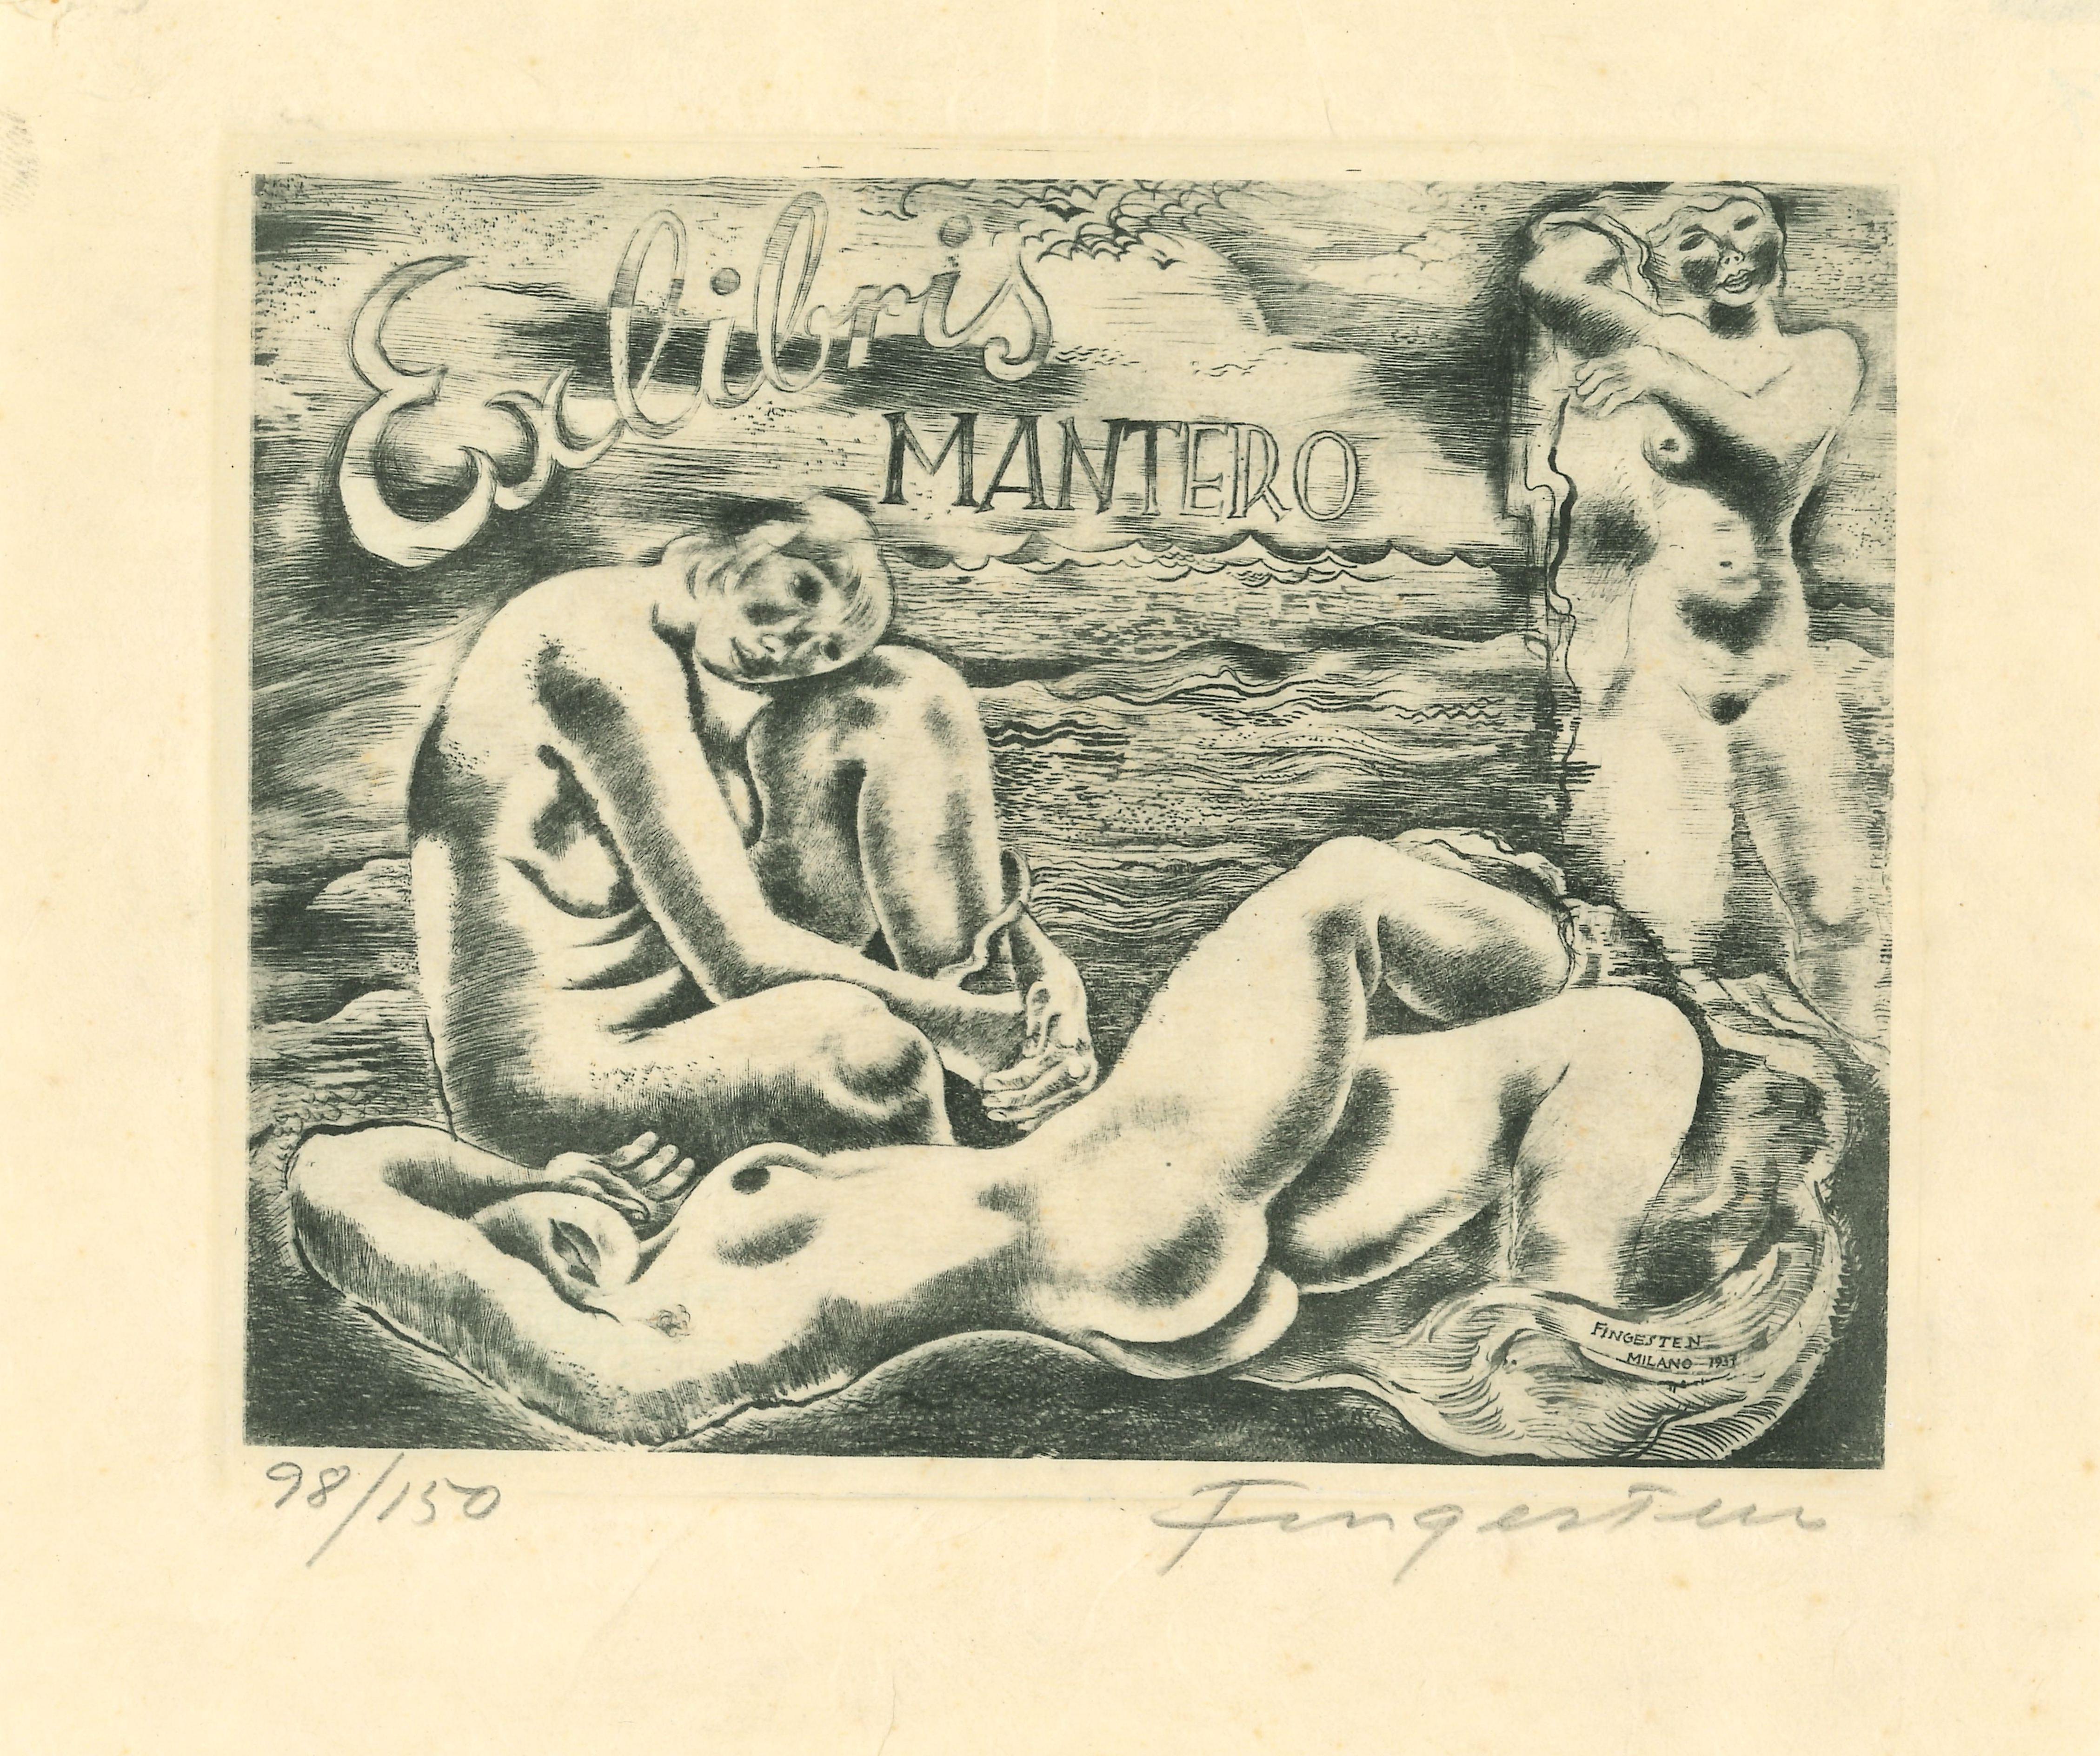 Michel Fingesten Figurative Print - Ex Libris Mantero - Original Etching by M. Fingesten - 1930s